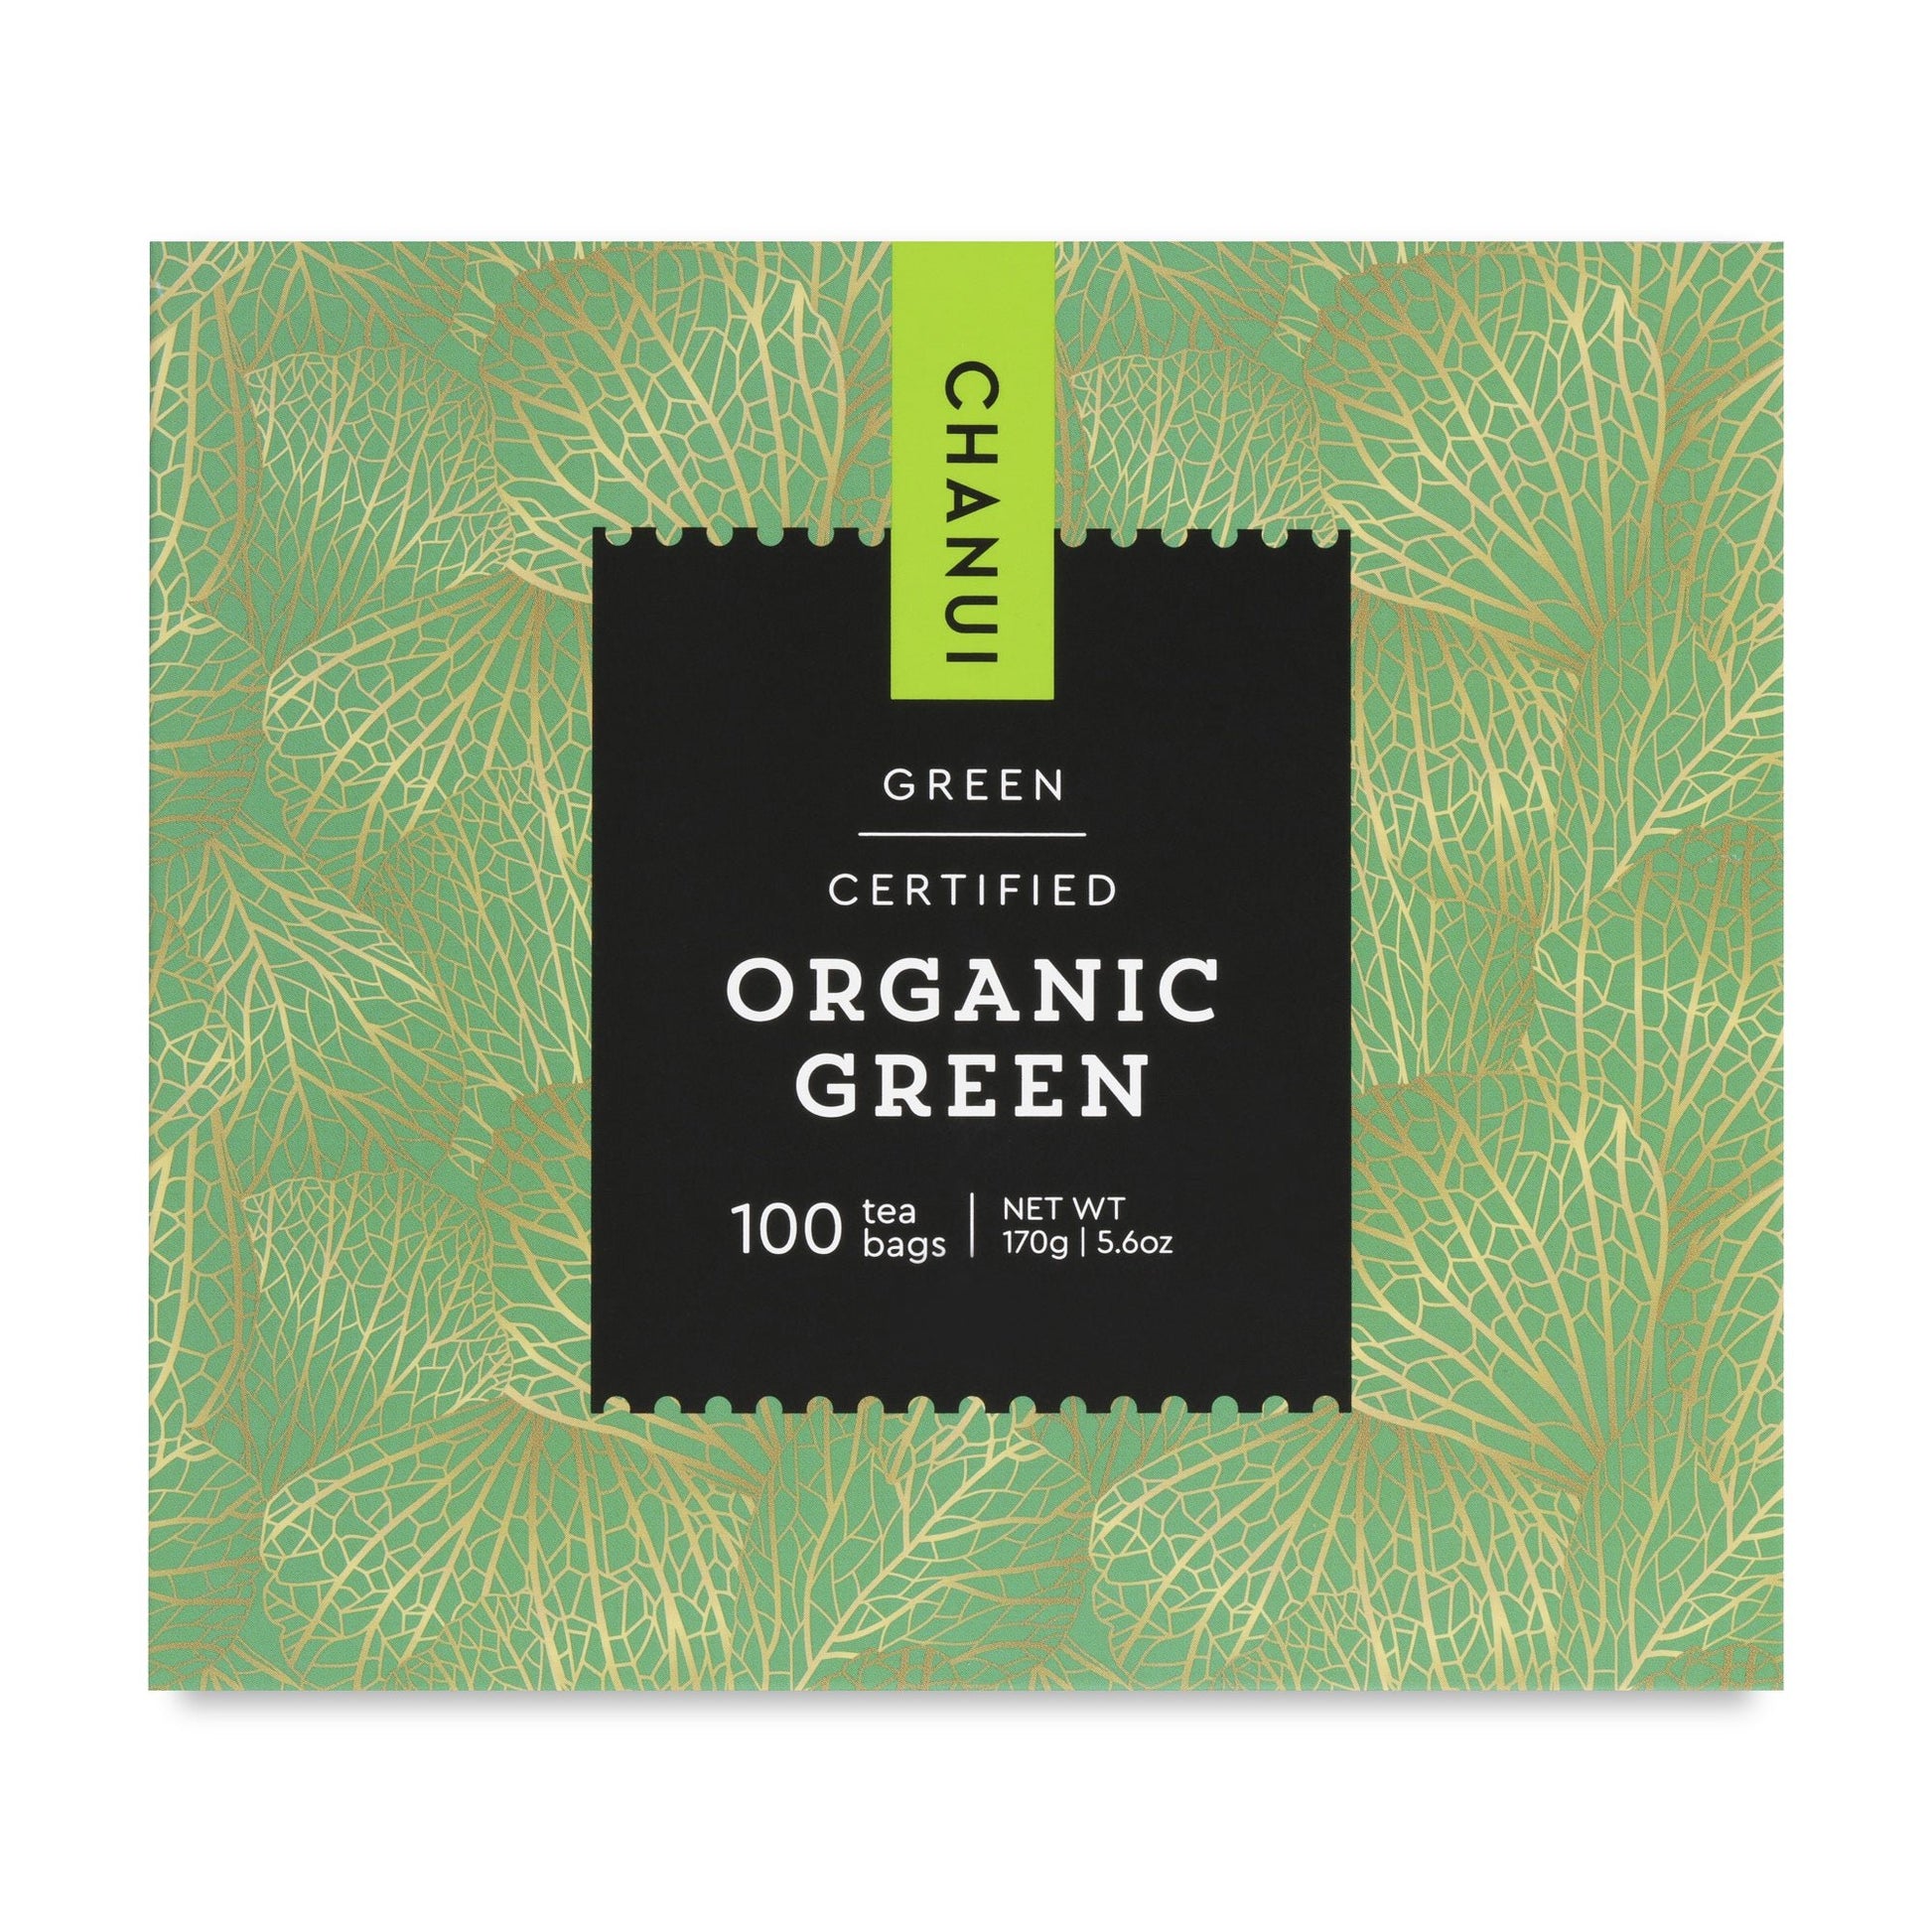 Green and Black box of Chanui Organic Green 100 Teabags